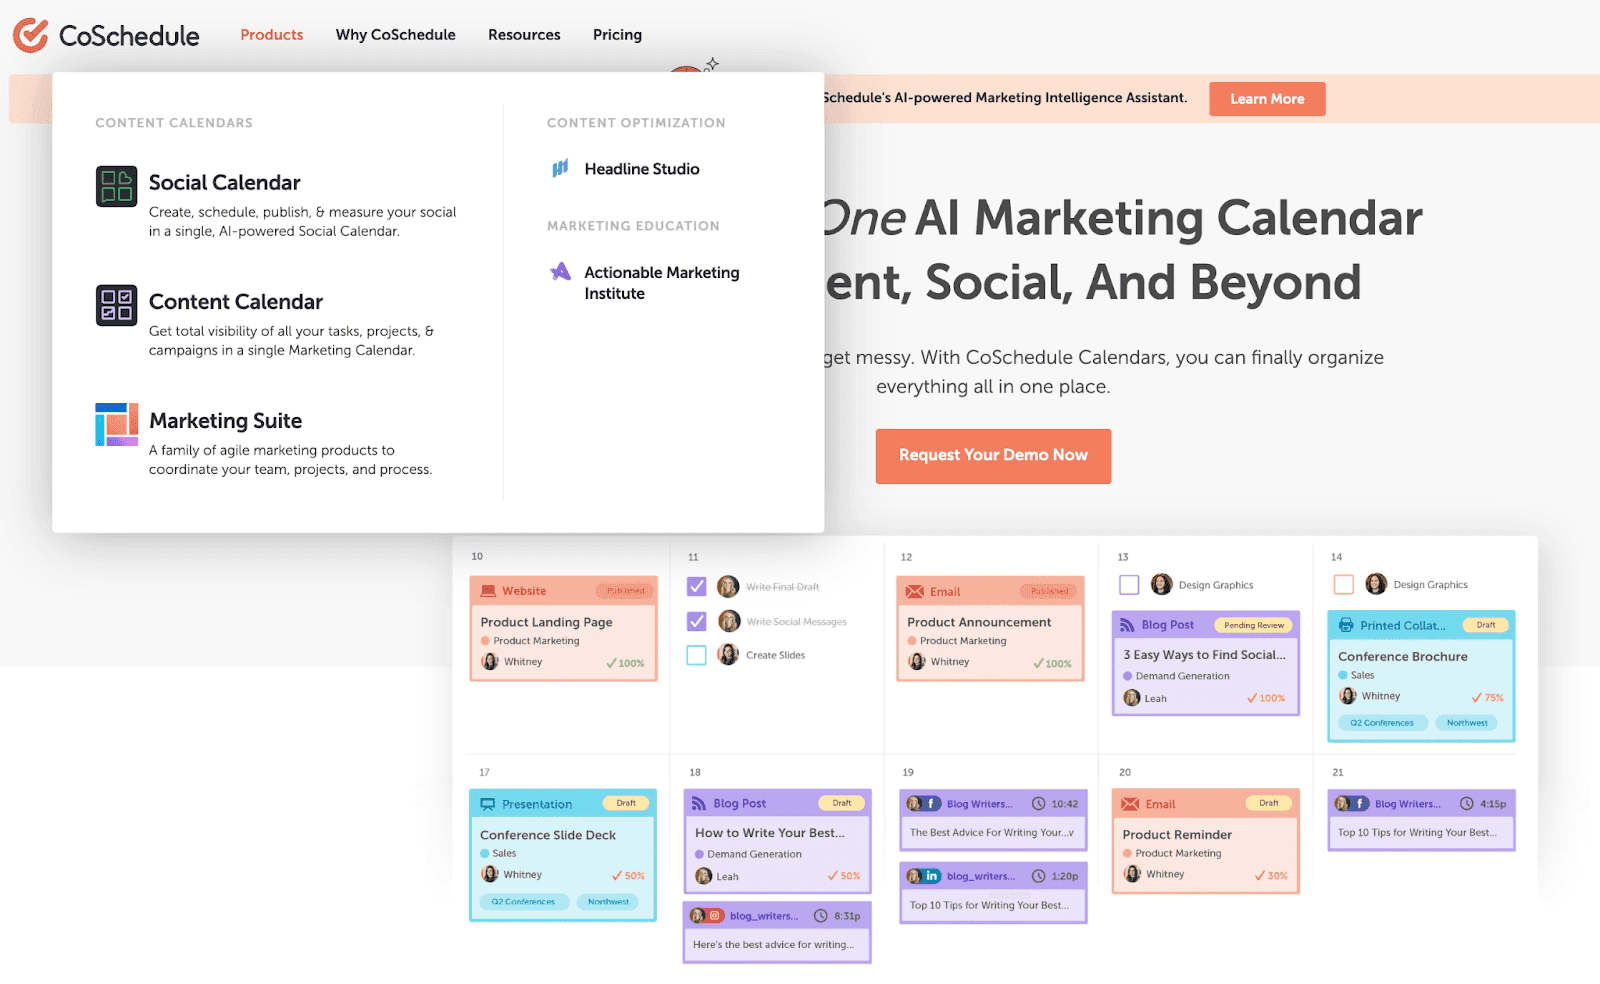 CoSchedule website - Product page dropdown displaying Social Calendar, Content Calendar, Marking Suite, Headline Studio, and Actionable Marketing Institute